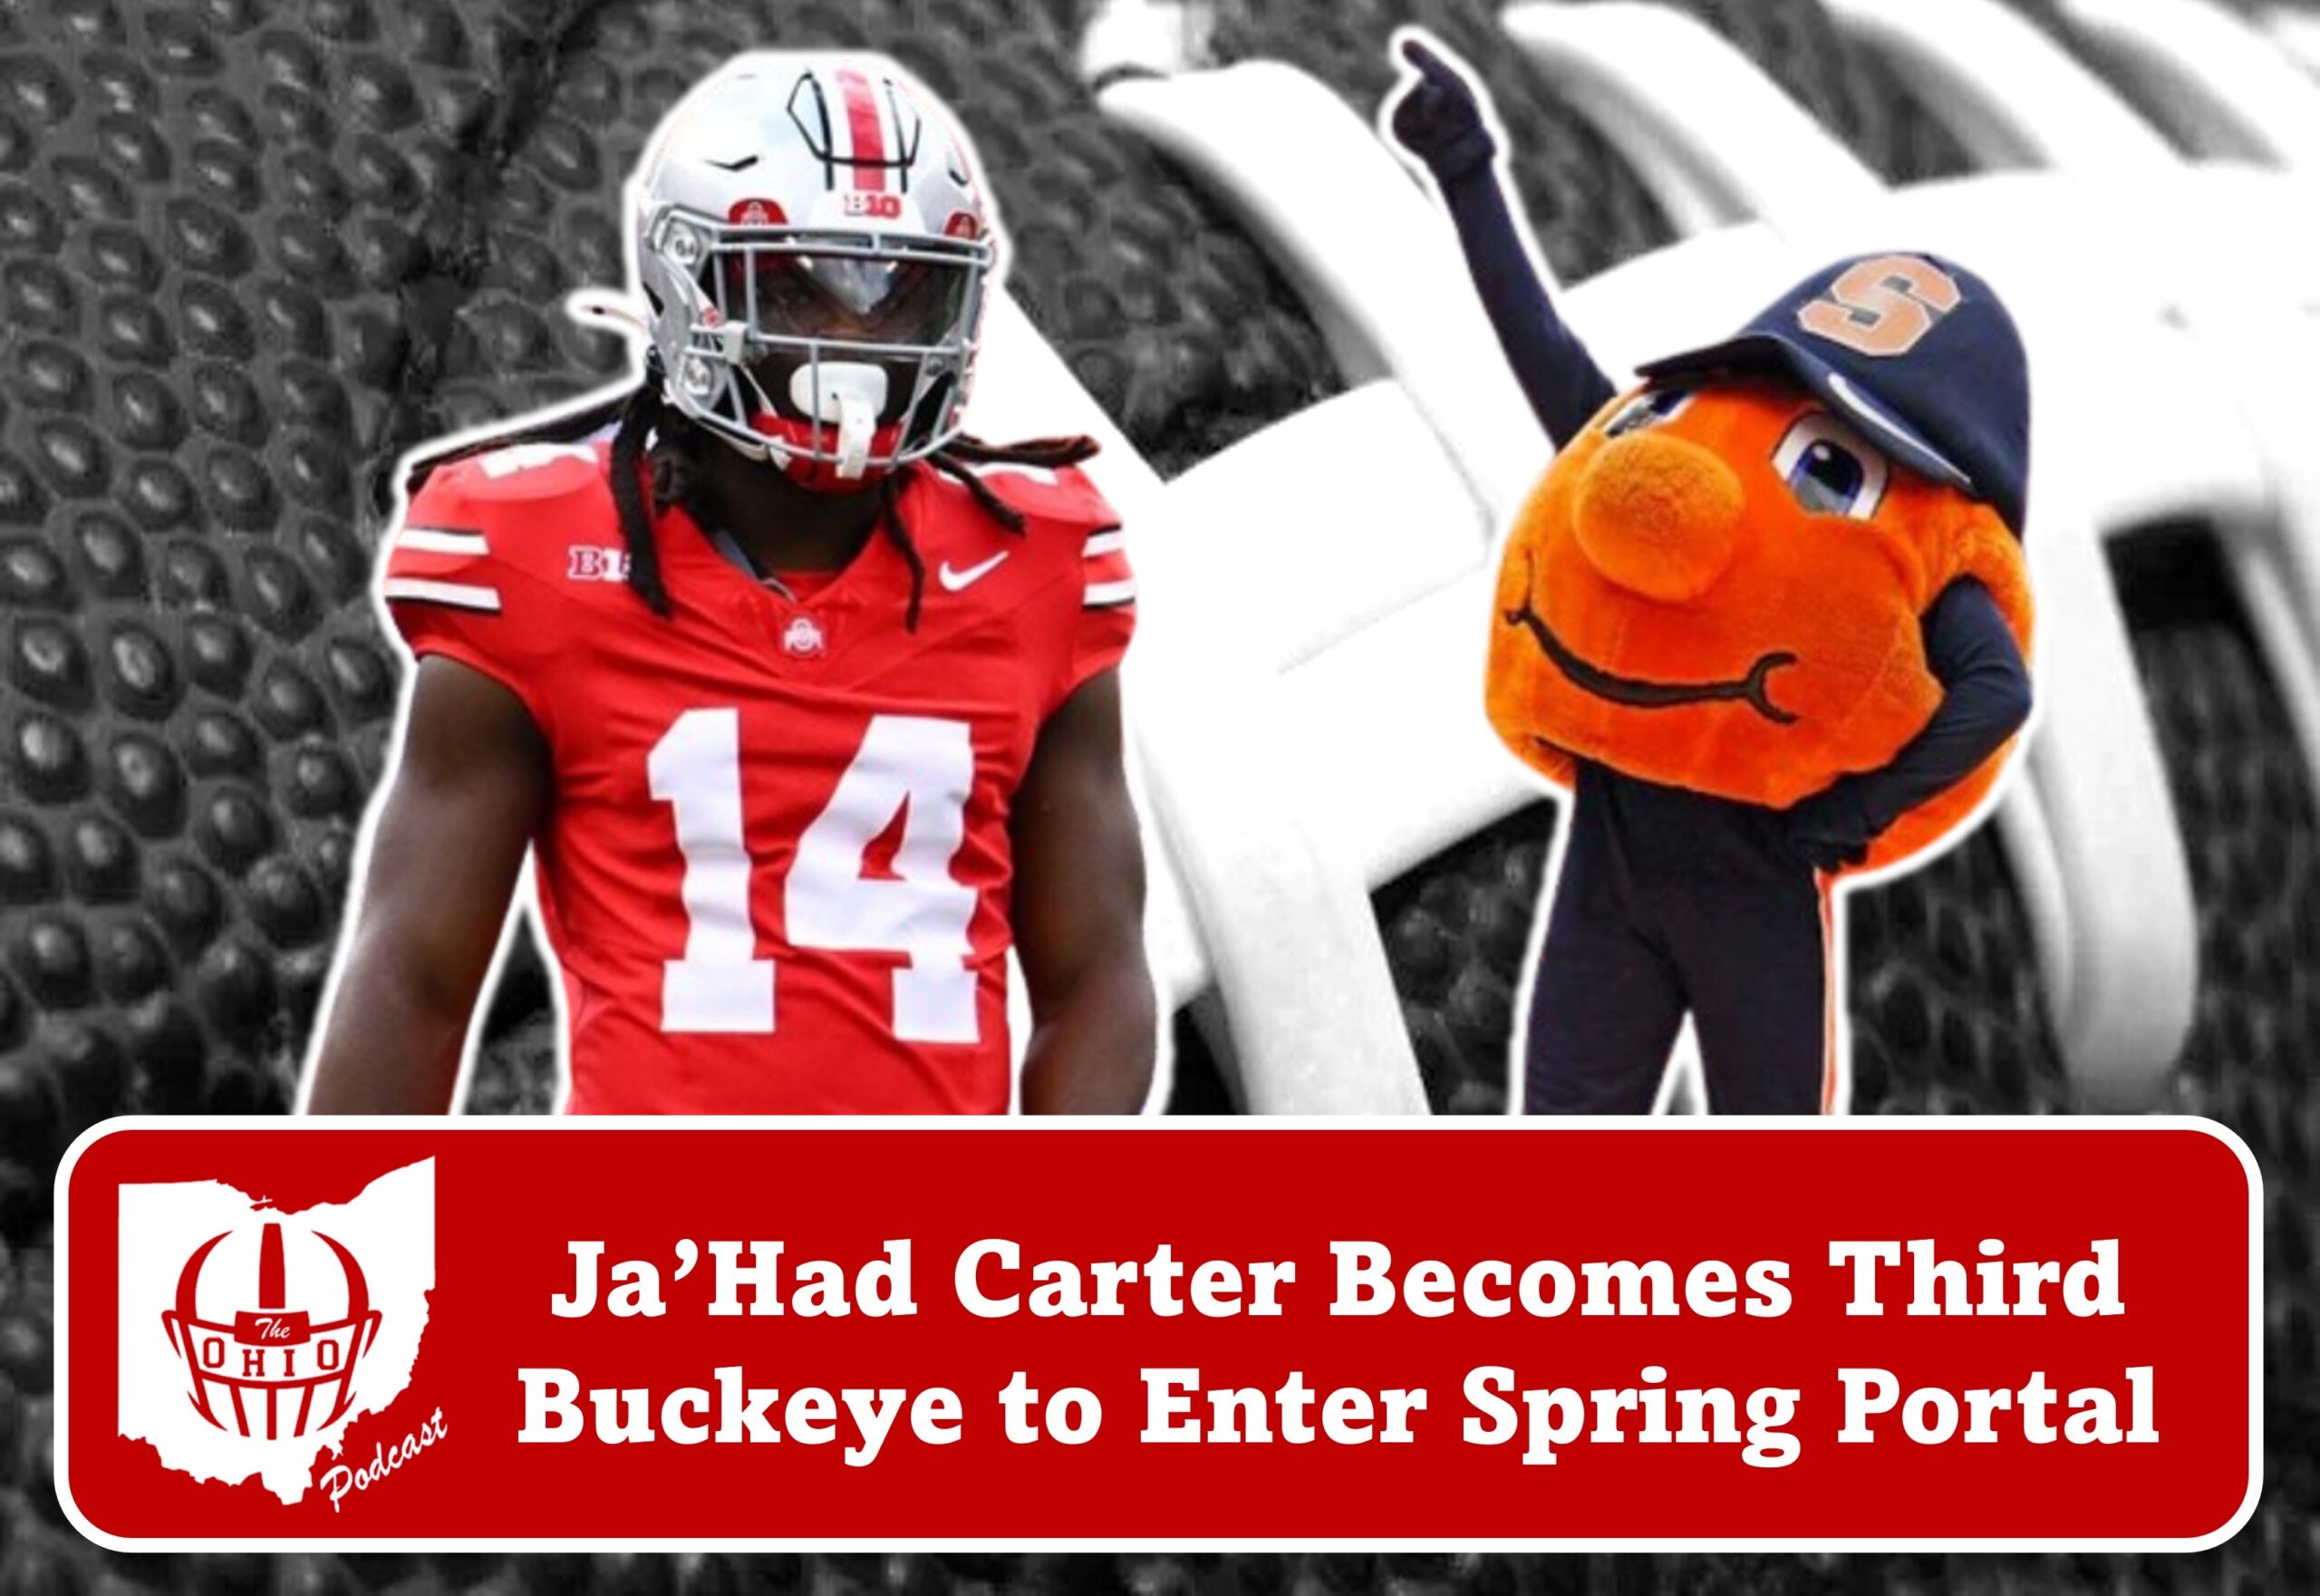 Ja'Had Carter Becomes Third Buckeye to Enter Spring Portal